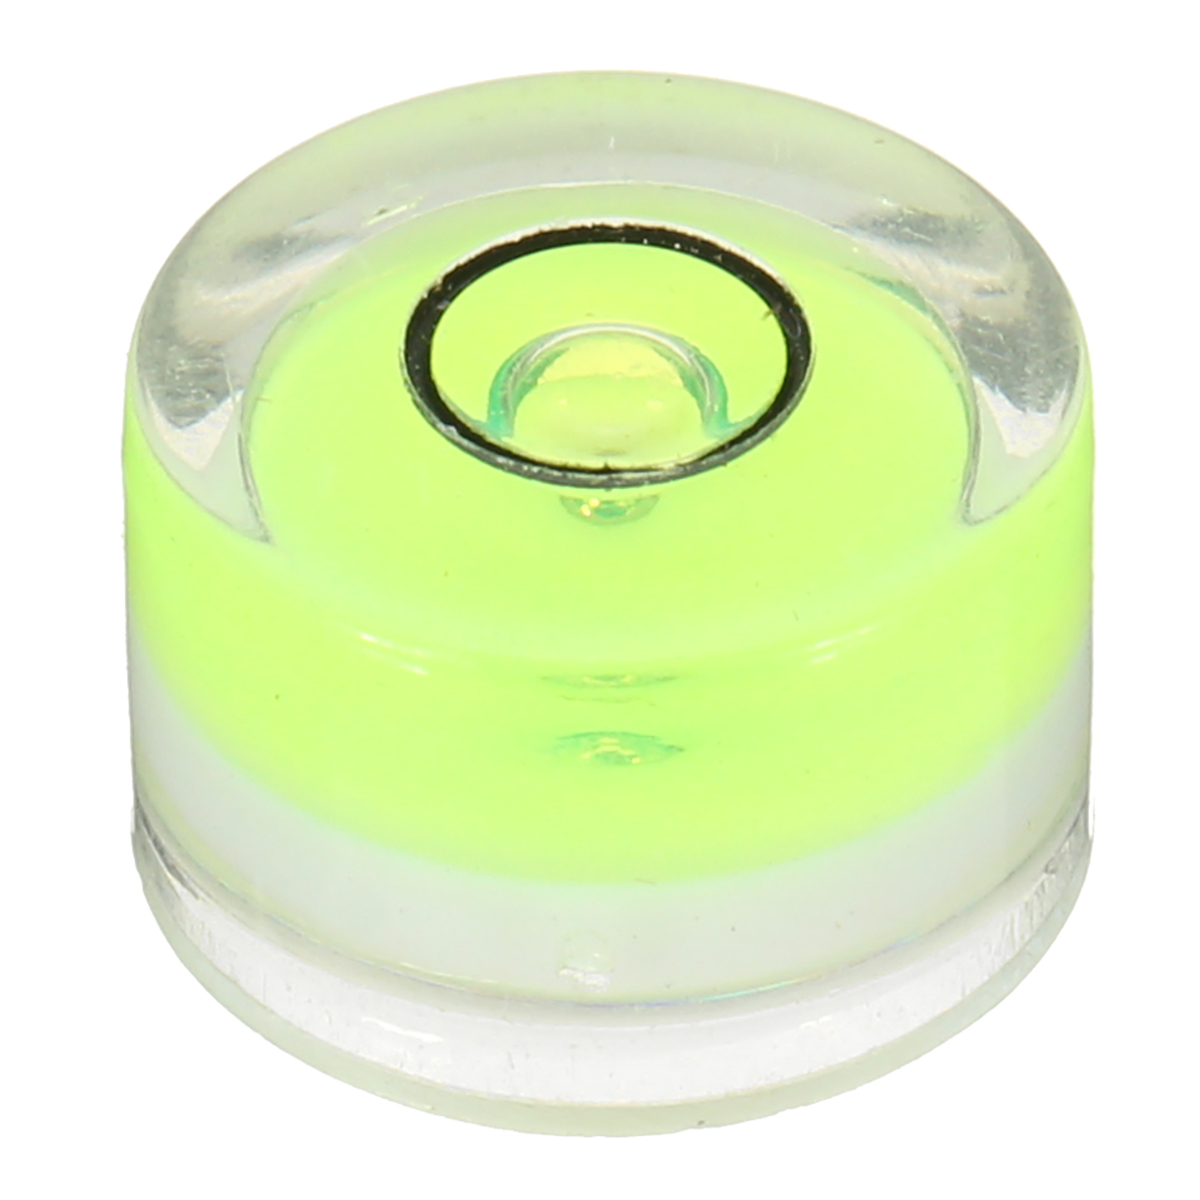 12x7mm-Tiny-Disc-Bubble-Spirit-Level-Round-Circle-Circular-Green-Tripod-1318440-2